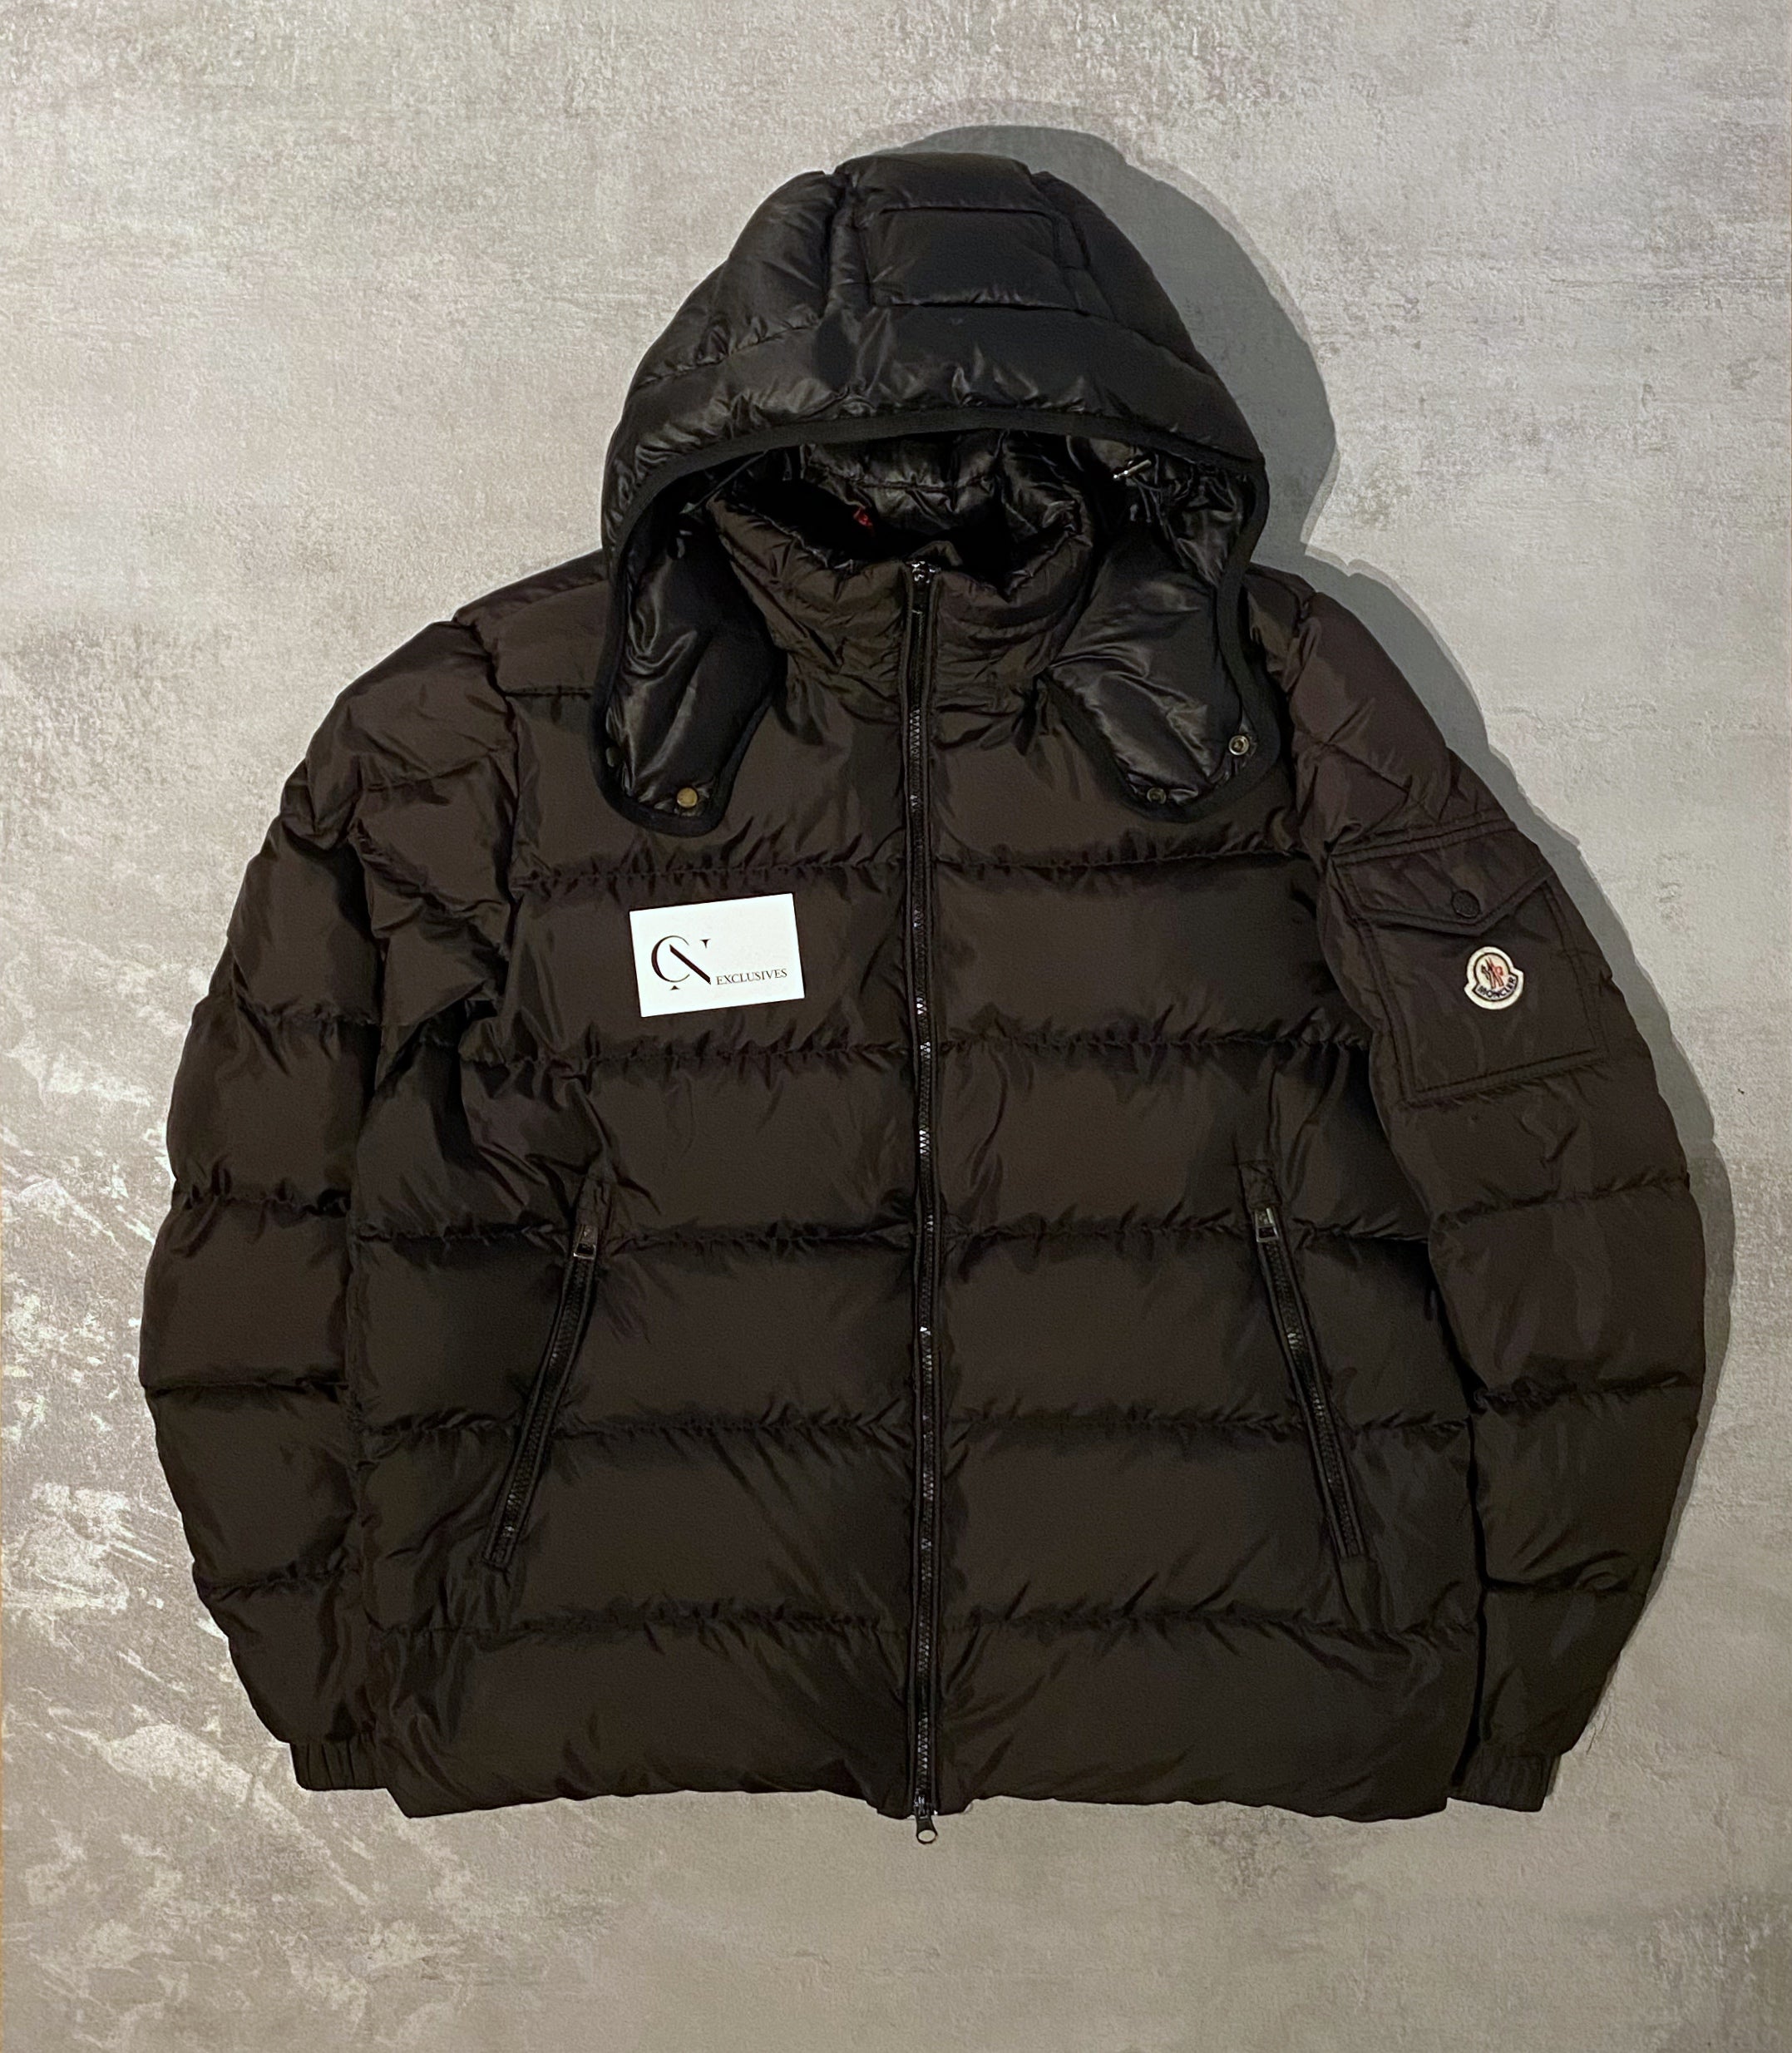 Moncler Himalaya Jacket - Size 6